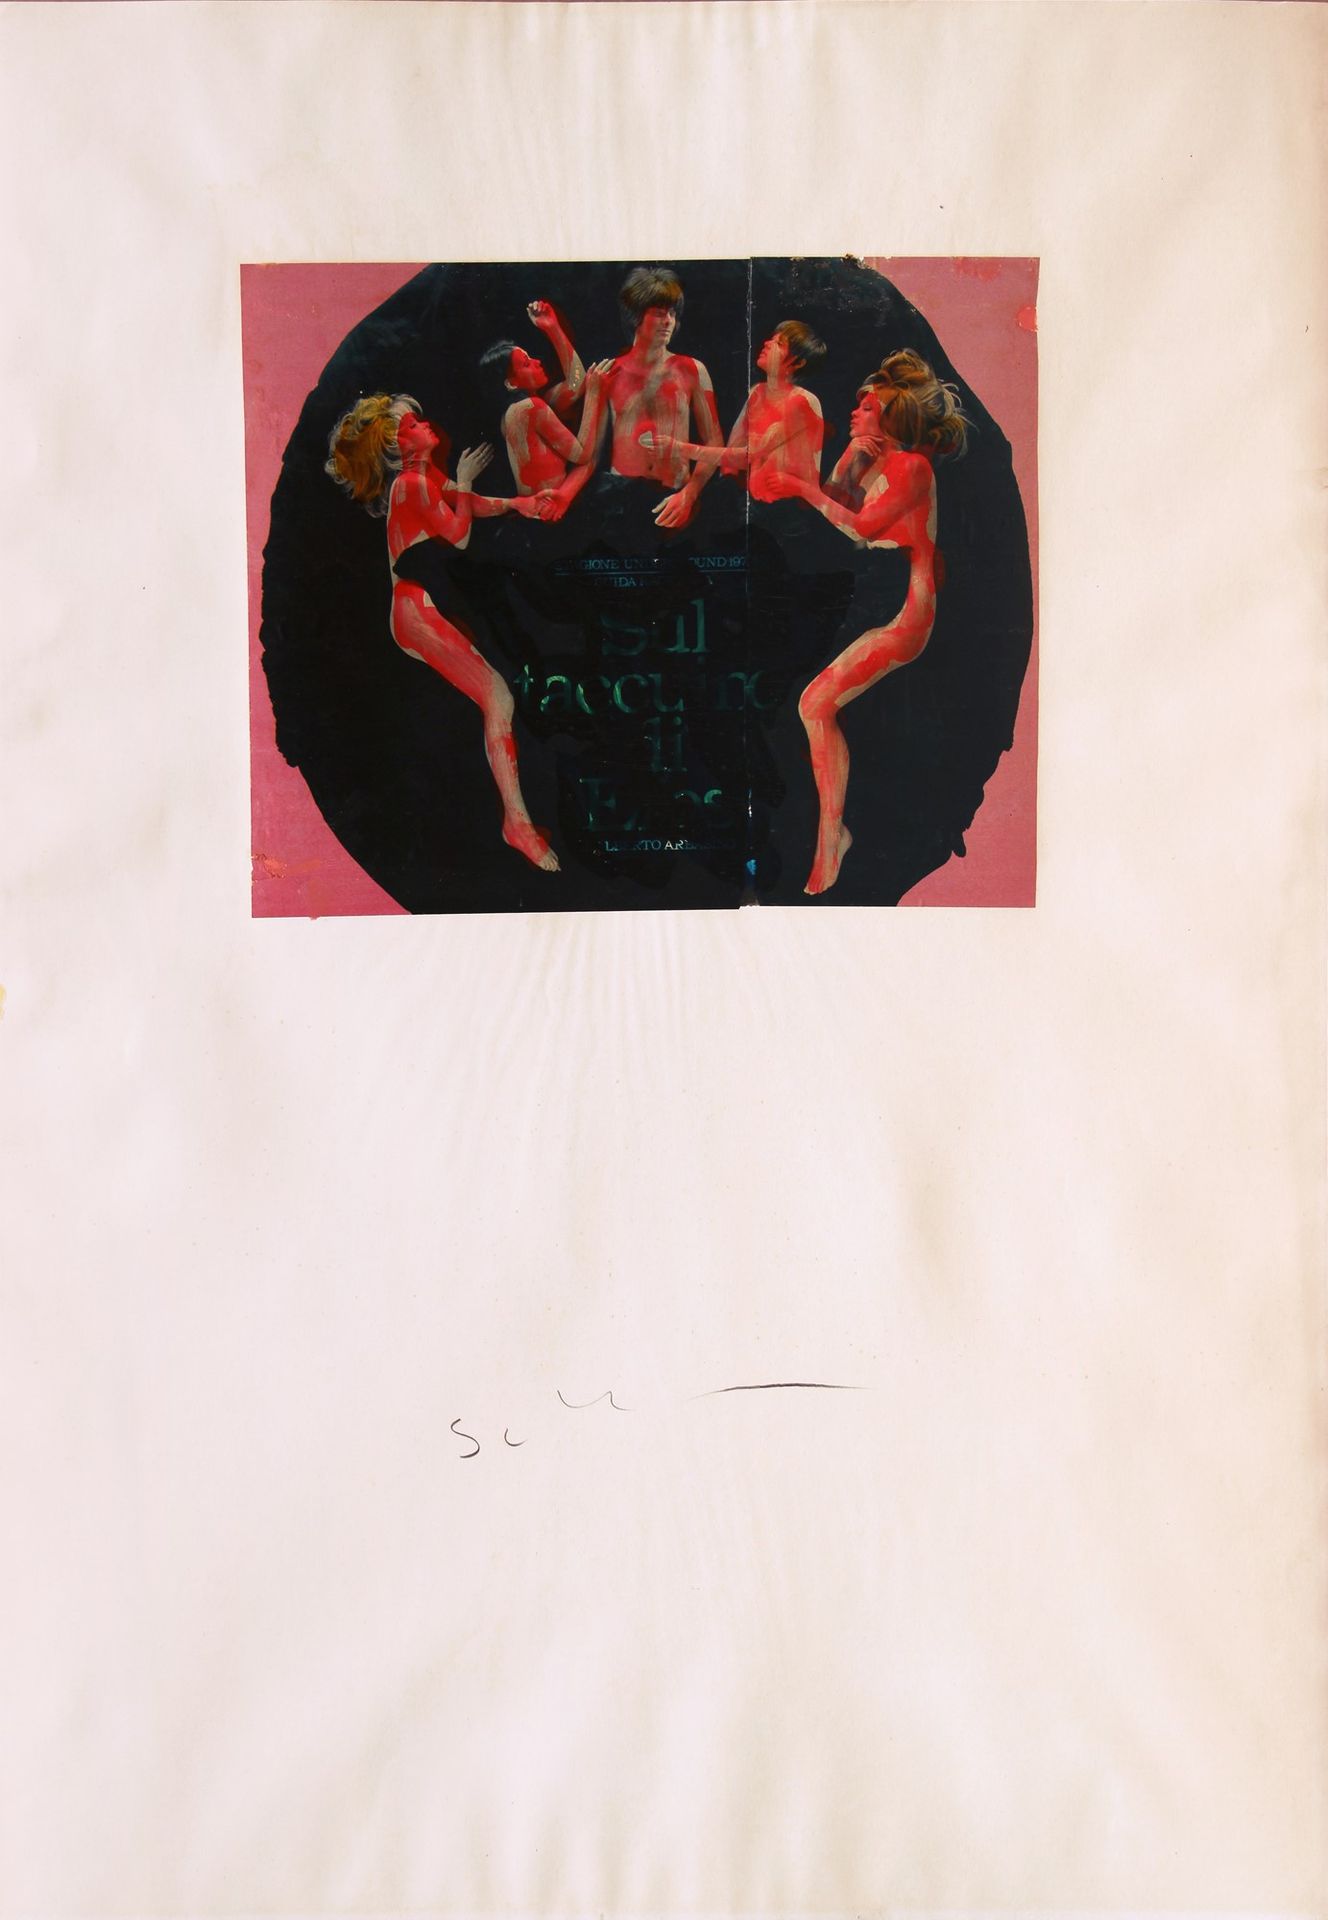 Mario SCHIFANO Untitled anni 70, enamel and collage on cardboard, cm. 100x70

Ce&hellip;